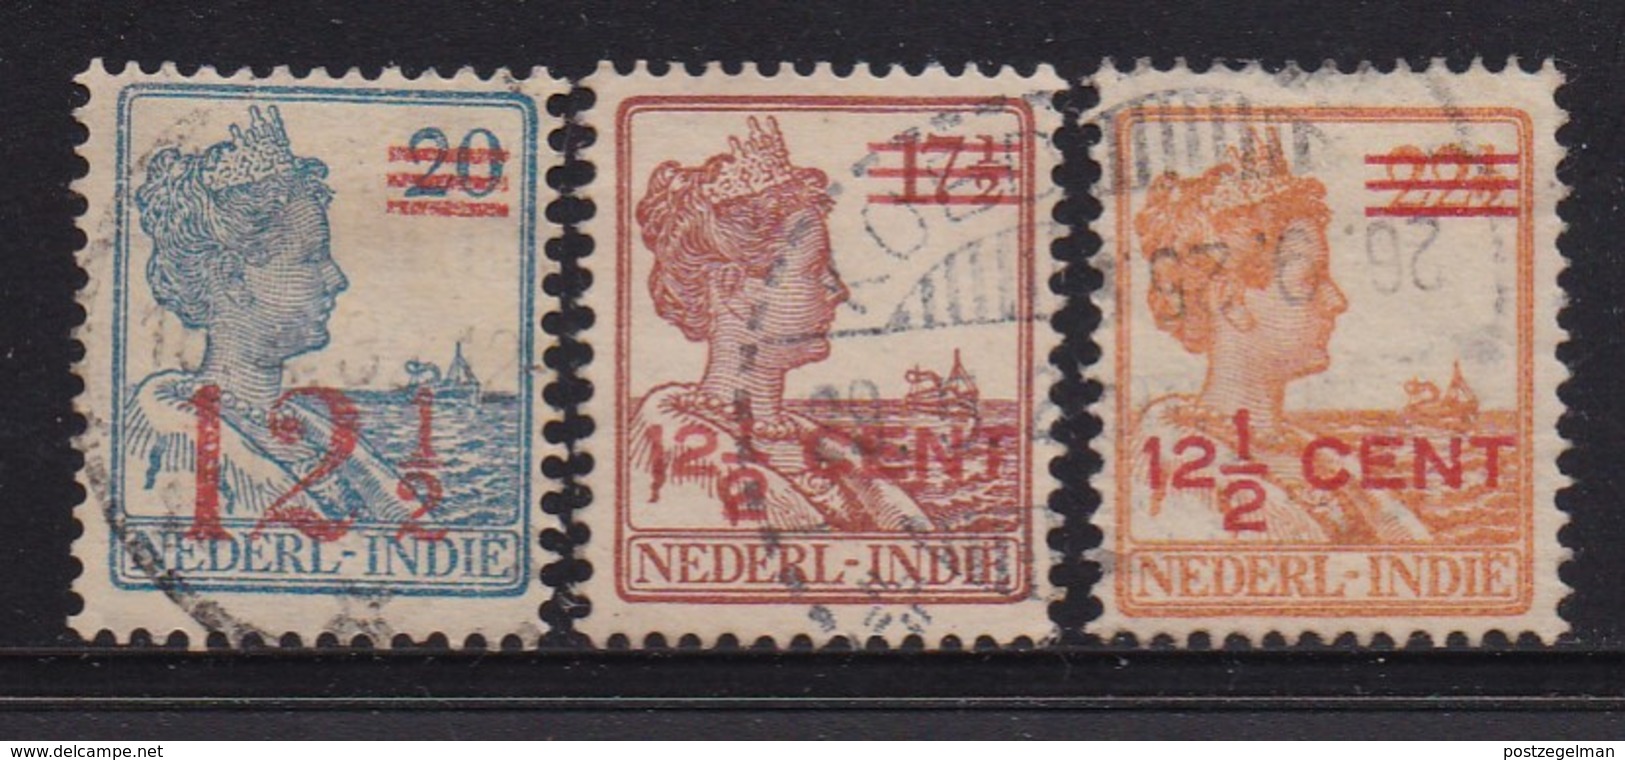 NETHERLAND-INDIES, 1921, Used Stamp(s), Queen Wilhelmina OVERPRINT, NVPH 171+142+143, Scannr. 5415, 3 Values Only - Netherlands Indies